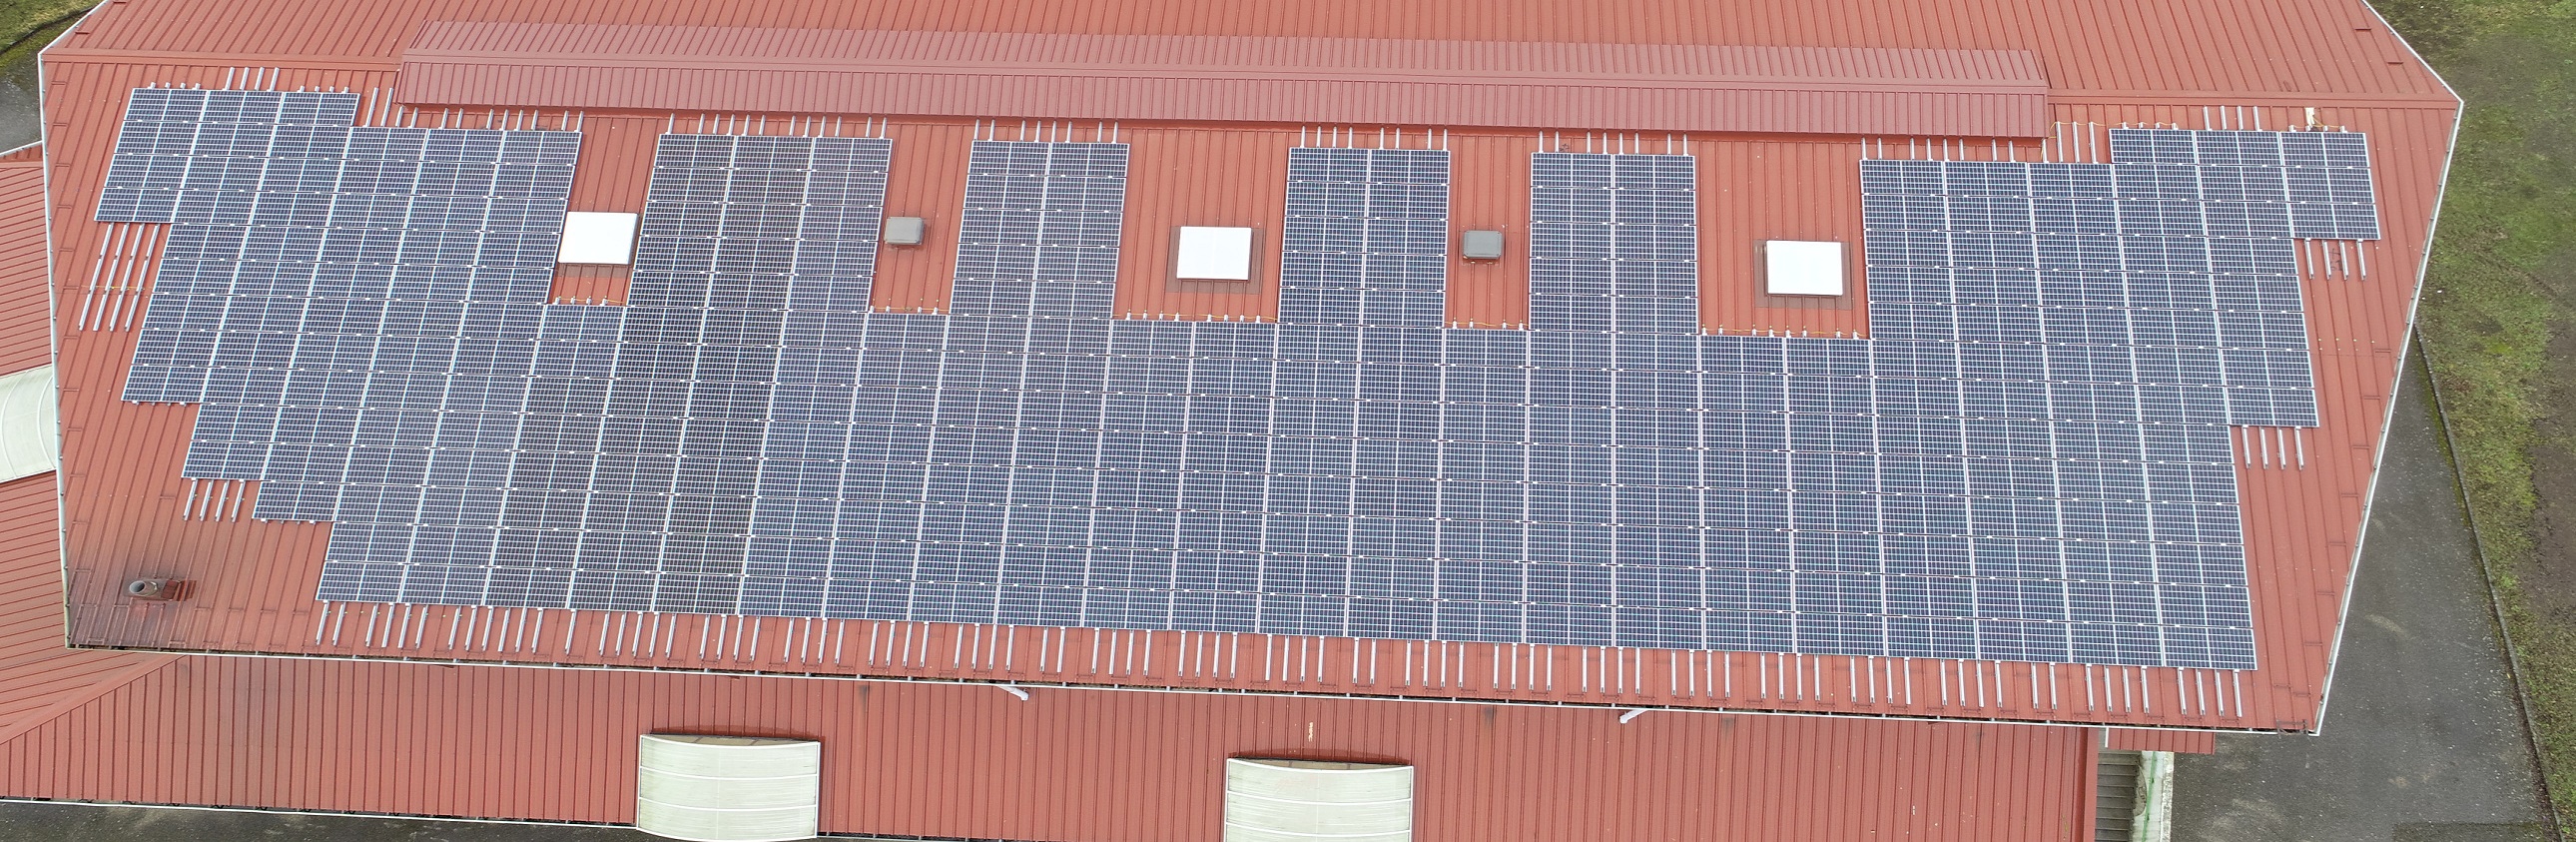 Centrale photovoltaïque gymnase d'Oyeu-Burcin